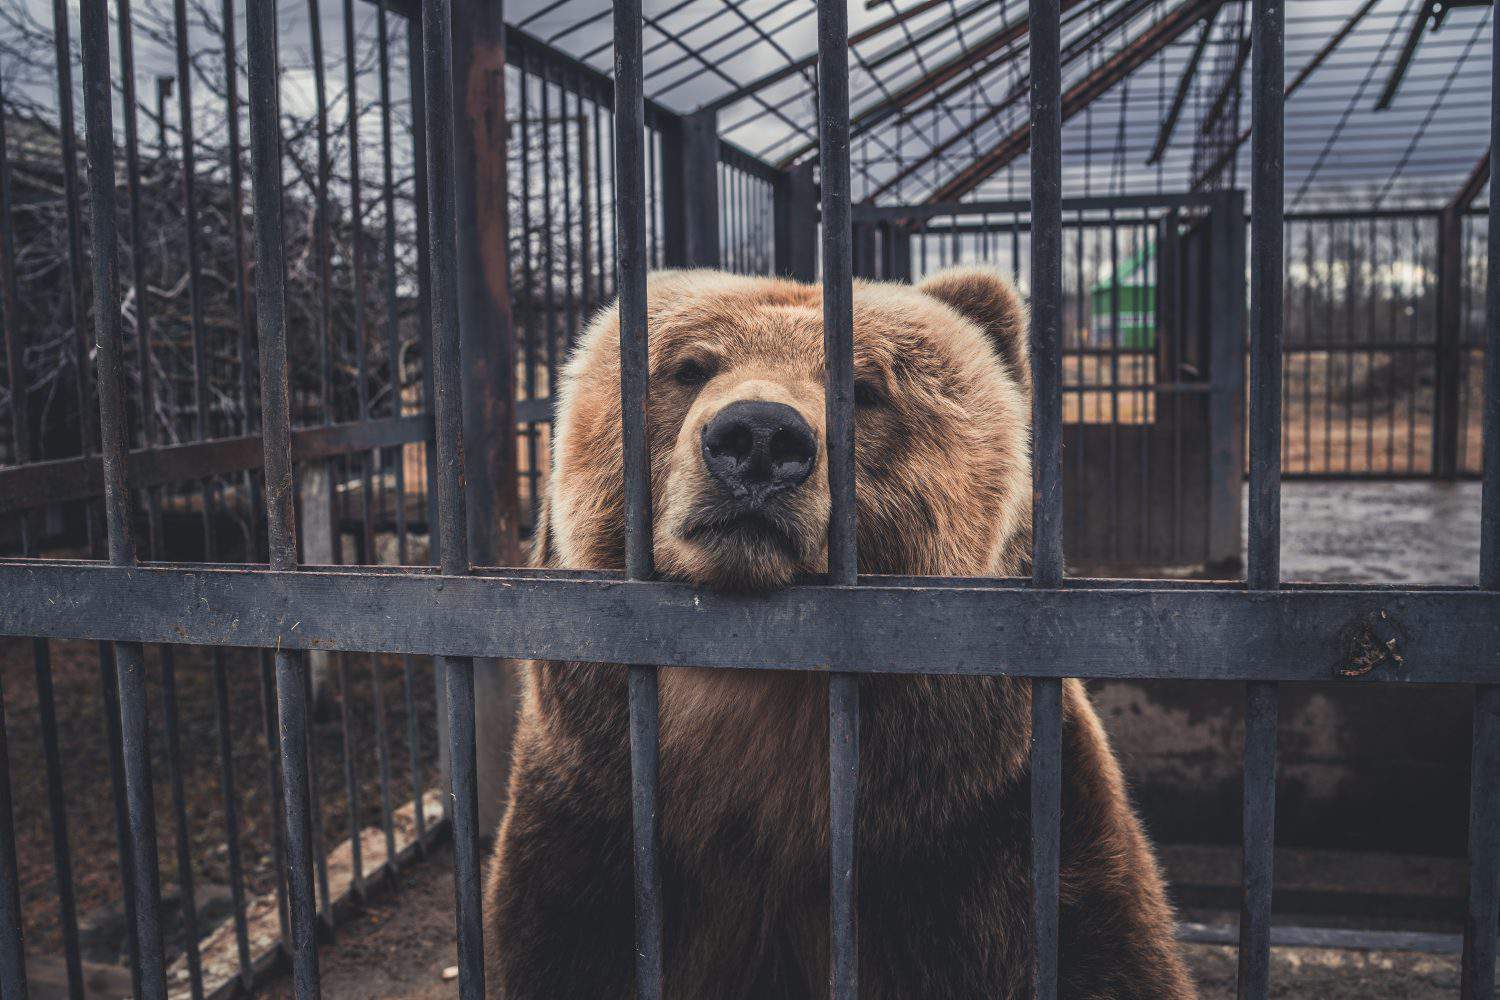 Brown bear behind bars